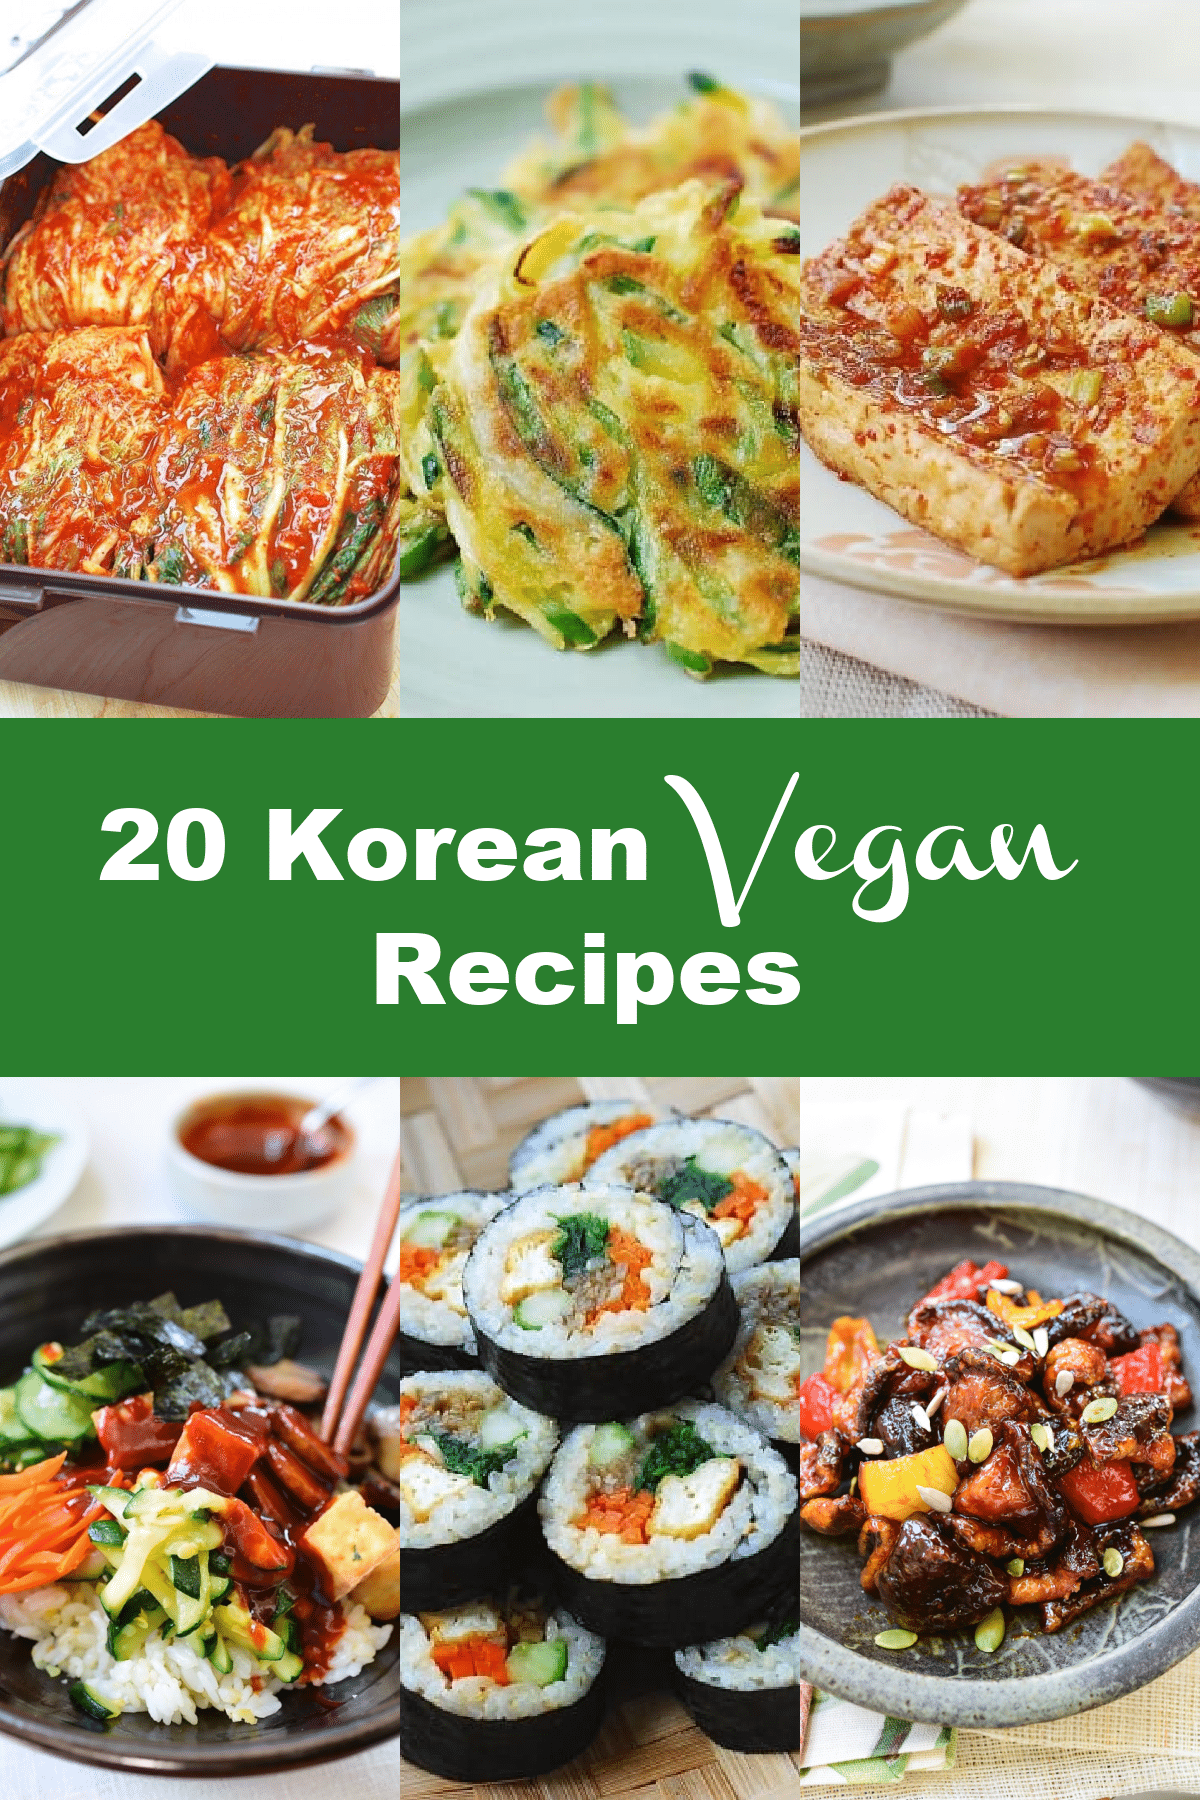 4 x 6 in 3 - 20 Korean Vegan Recipes